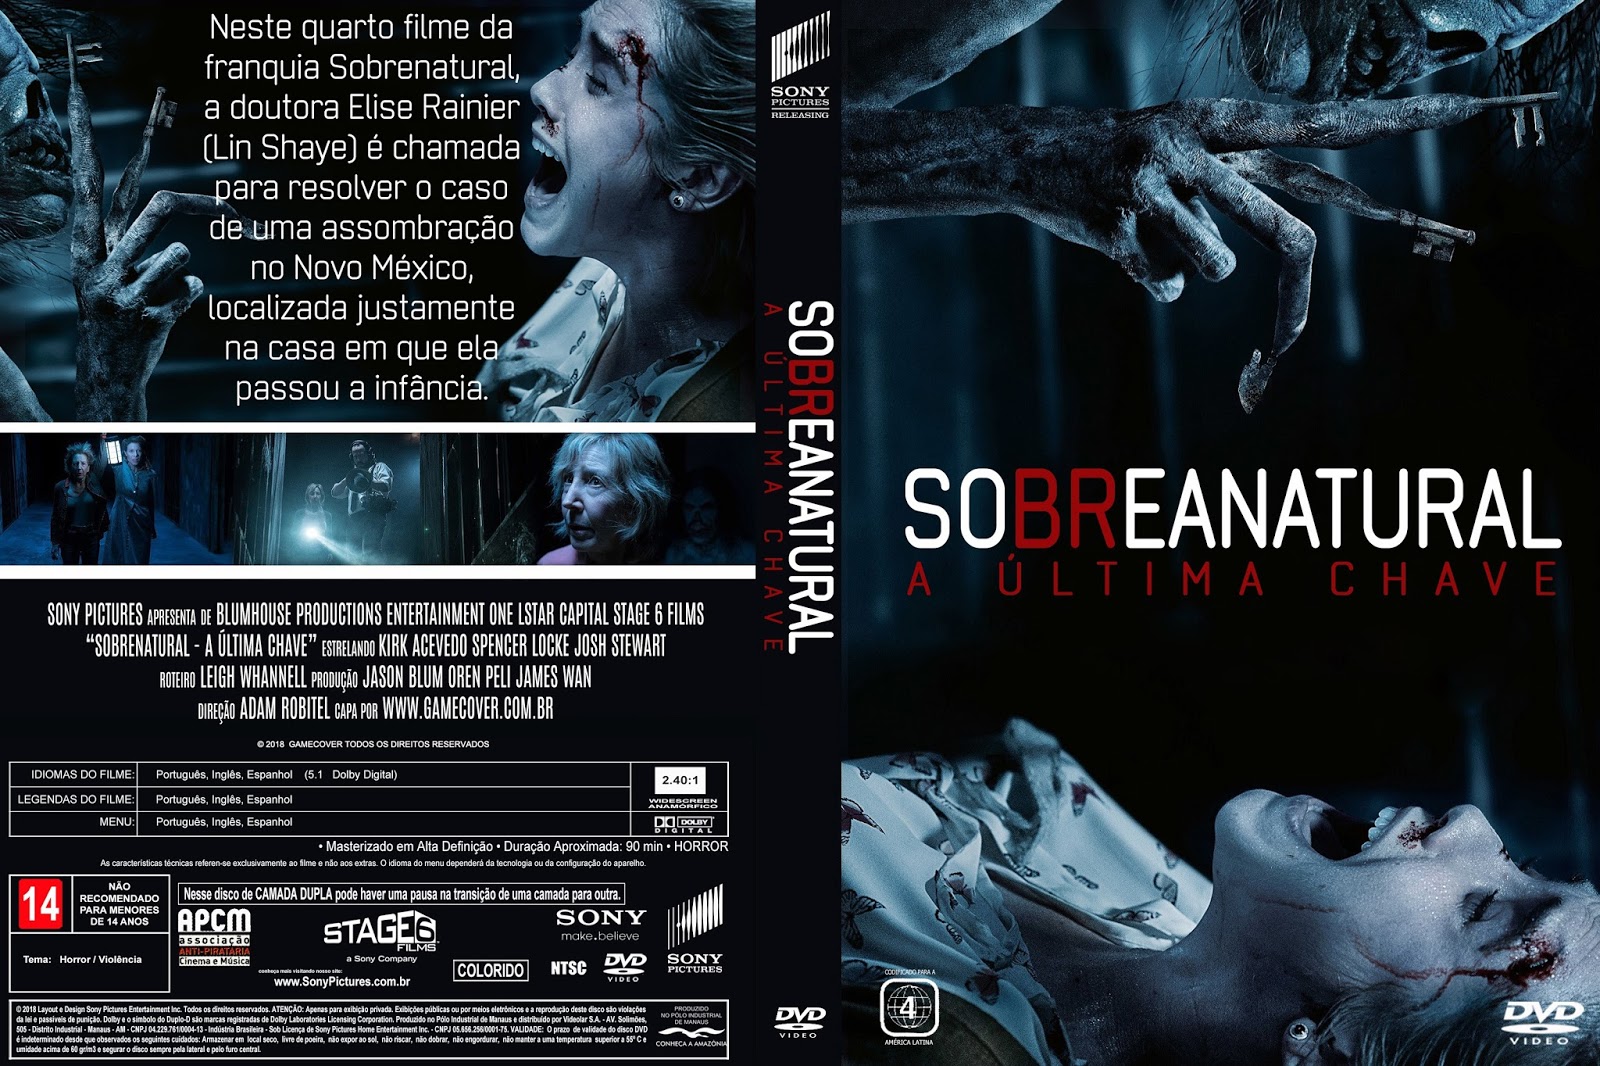 Sobrenatural: A Última Chave [DVD]